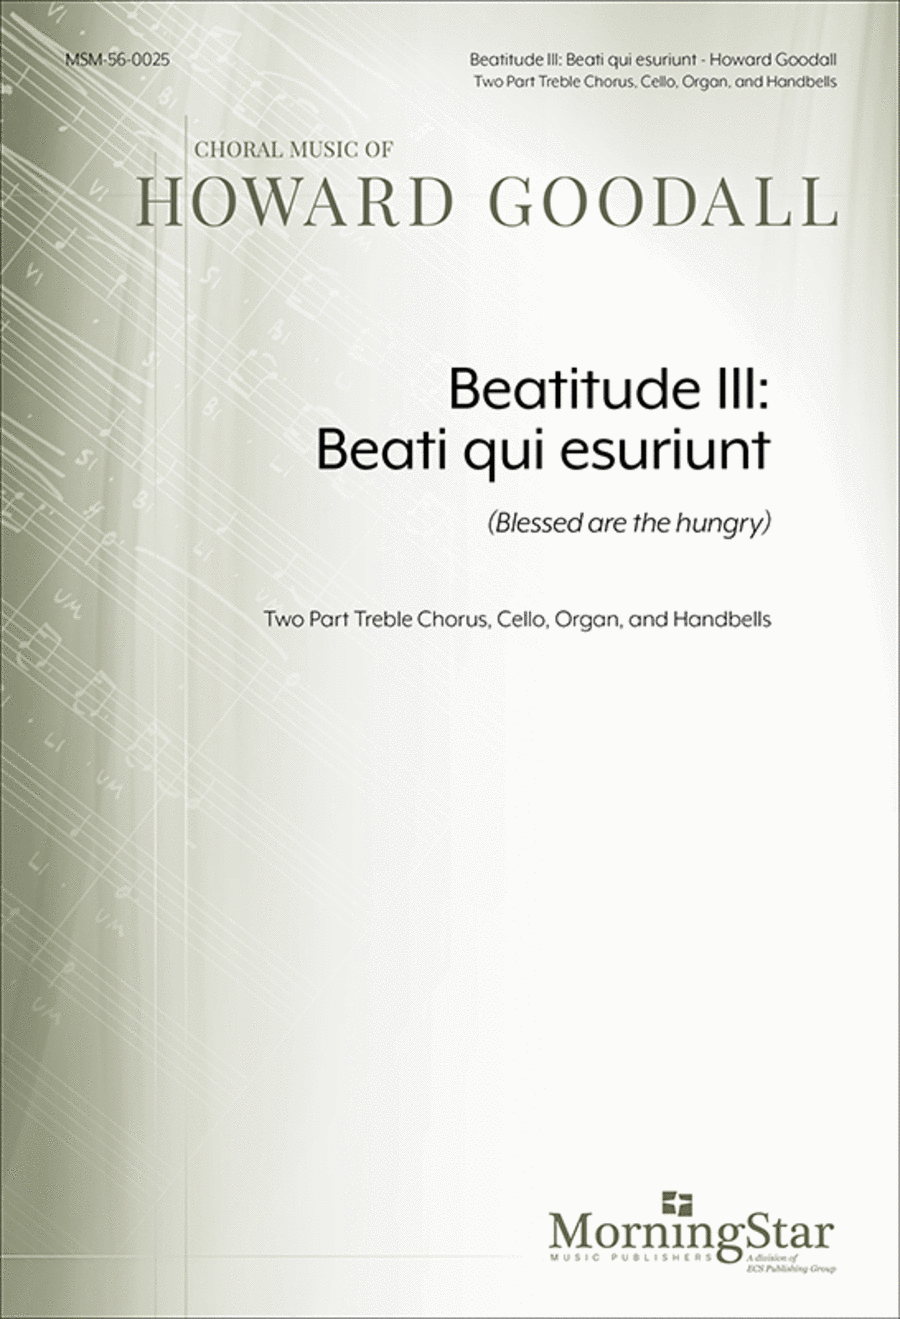 Beatitude III: Beati qui esuriunt (Blessed are the hungry)